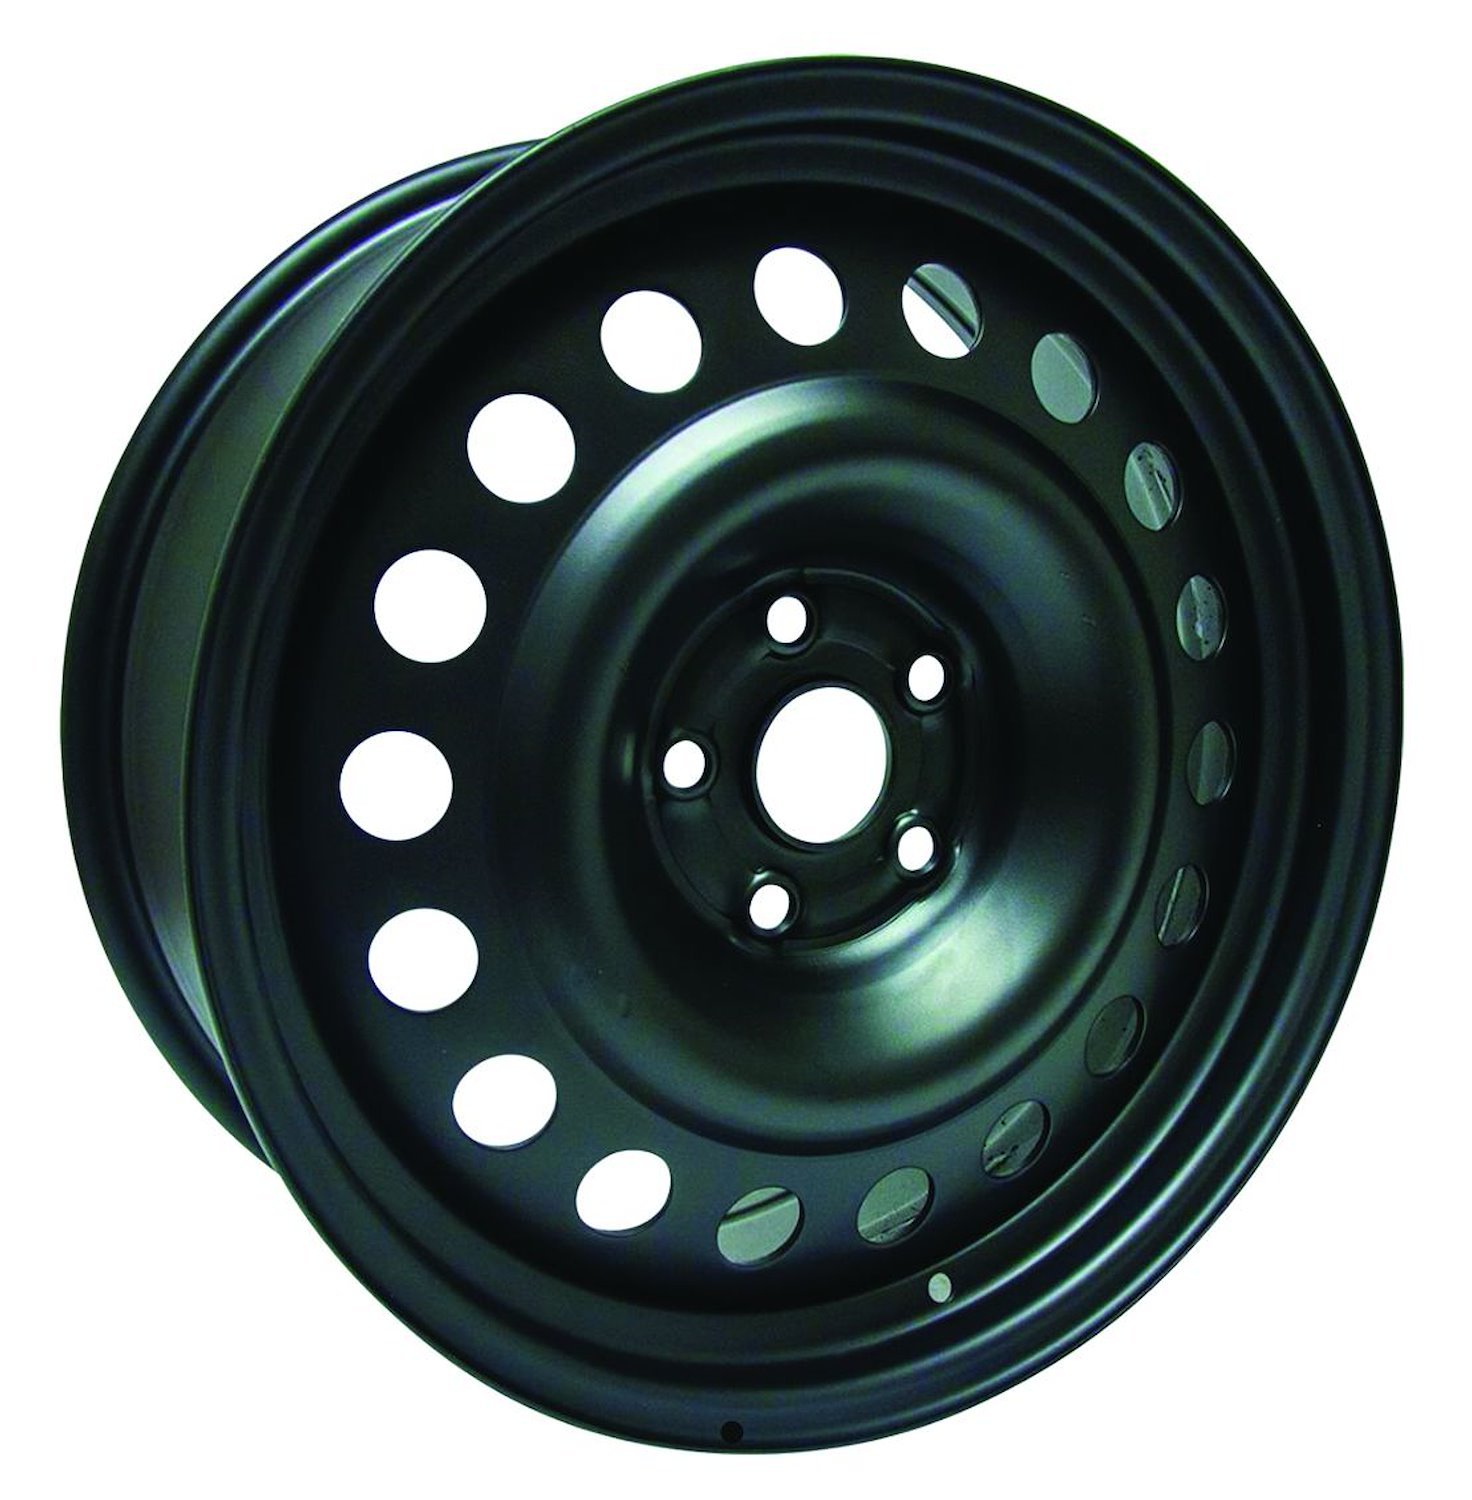 X48215 Steel Wheel [Size: 18" x 7.50"] Black Finish